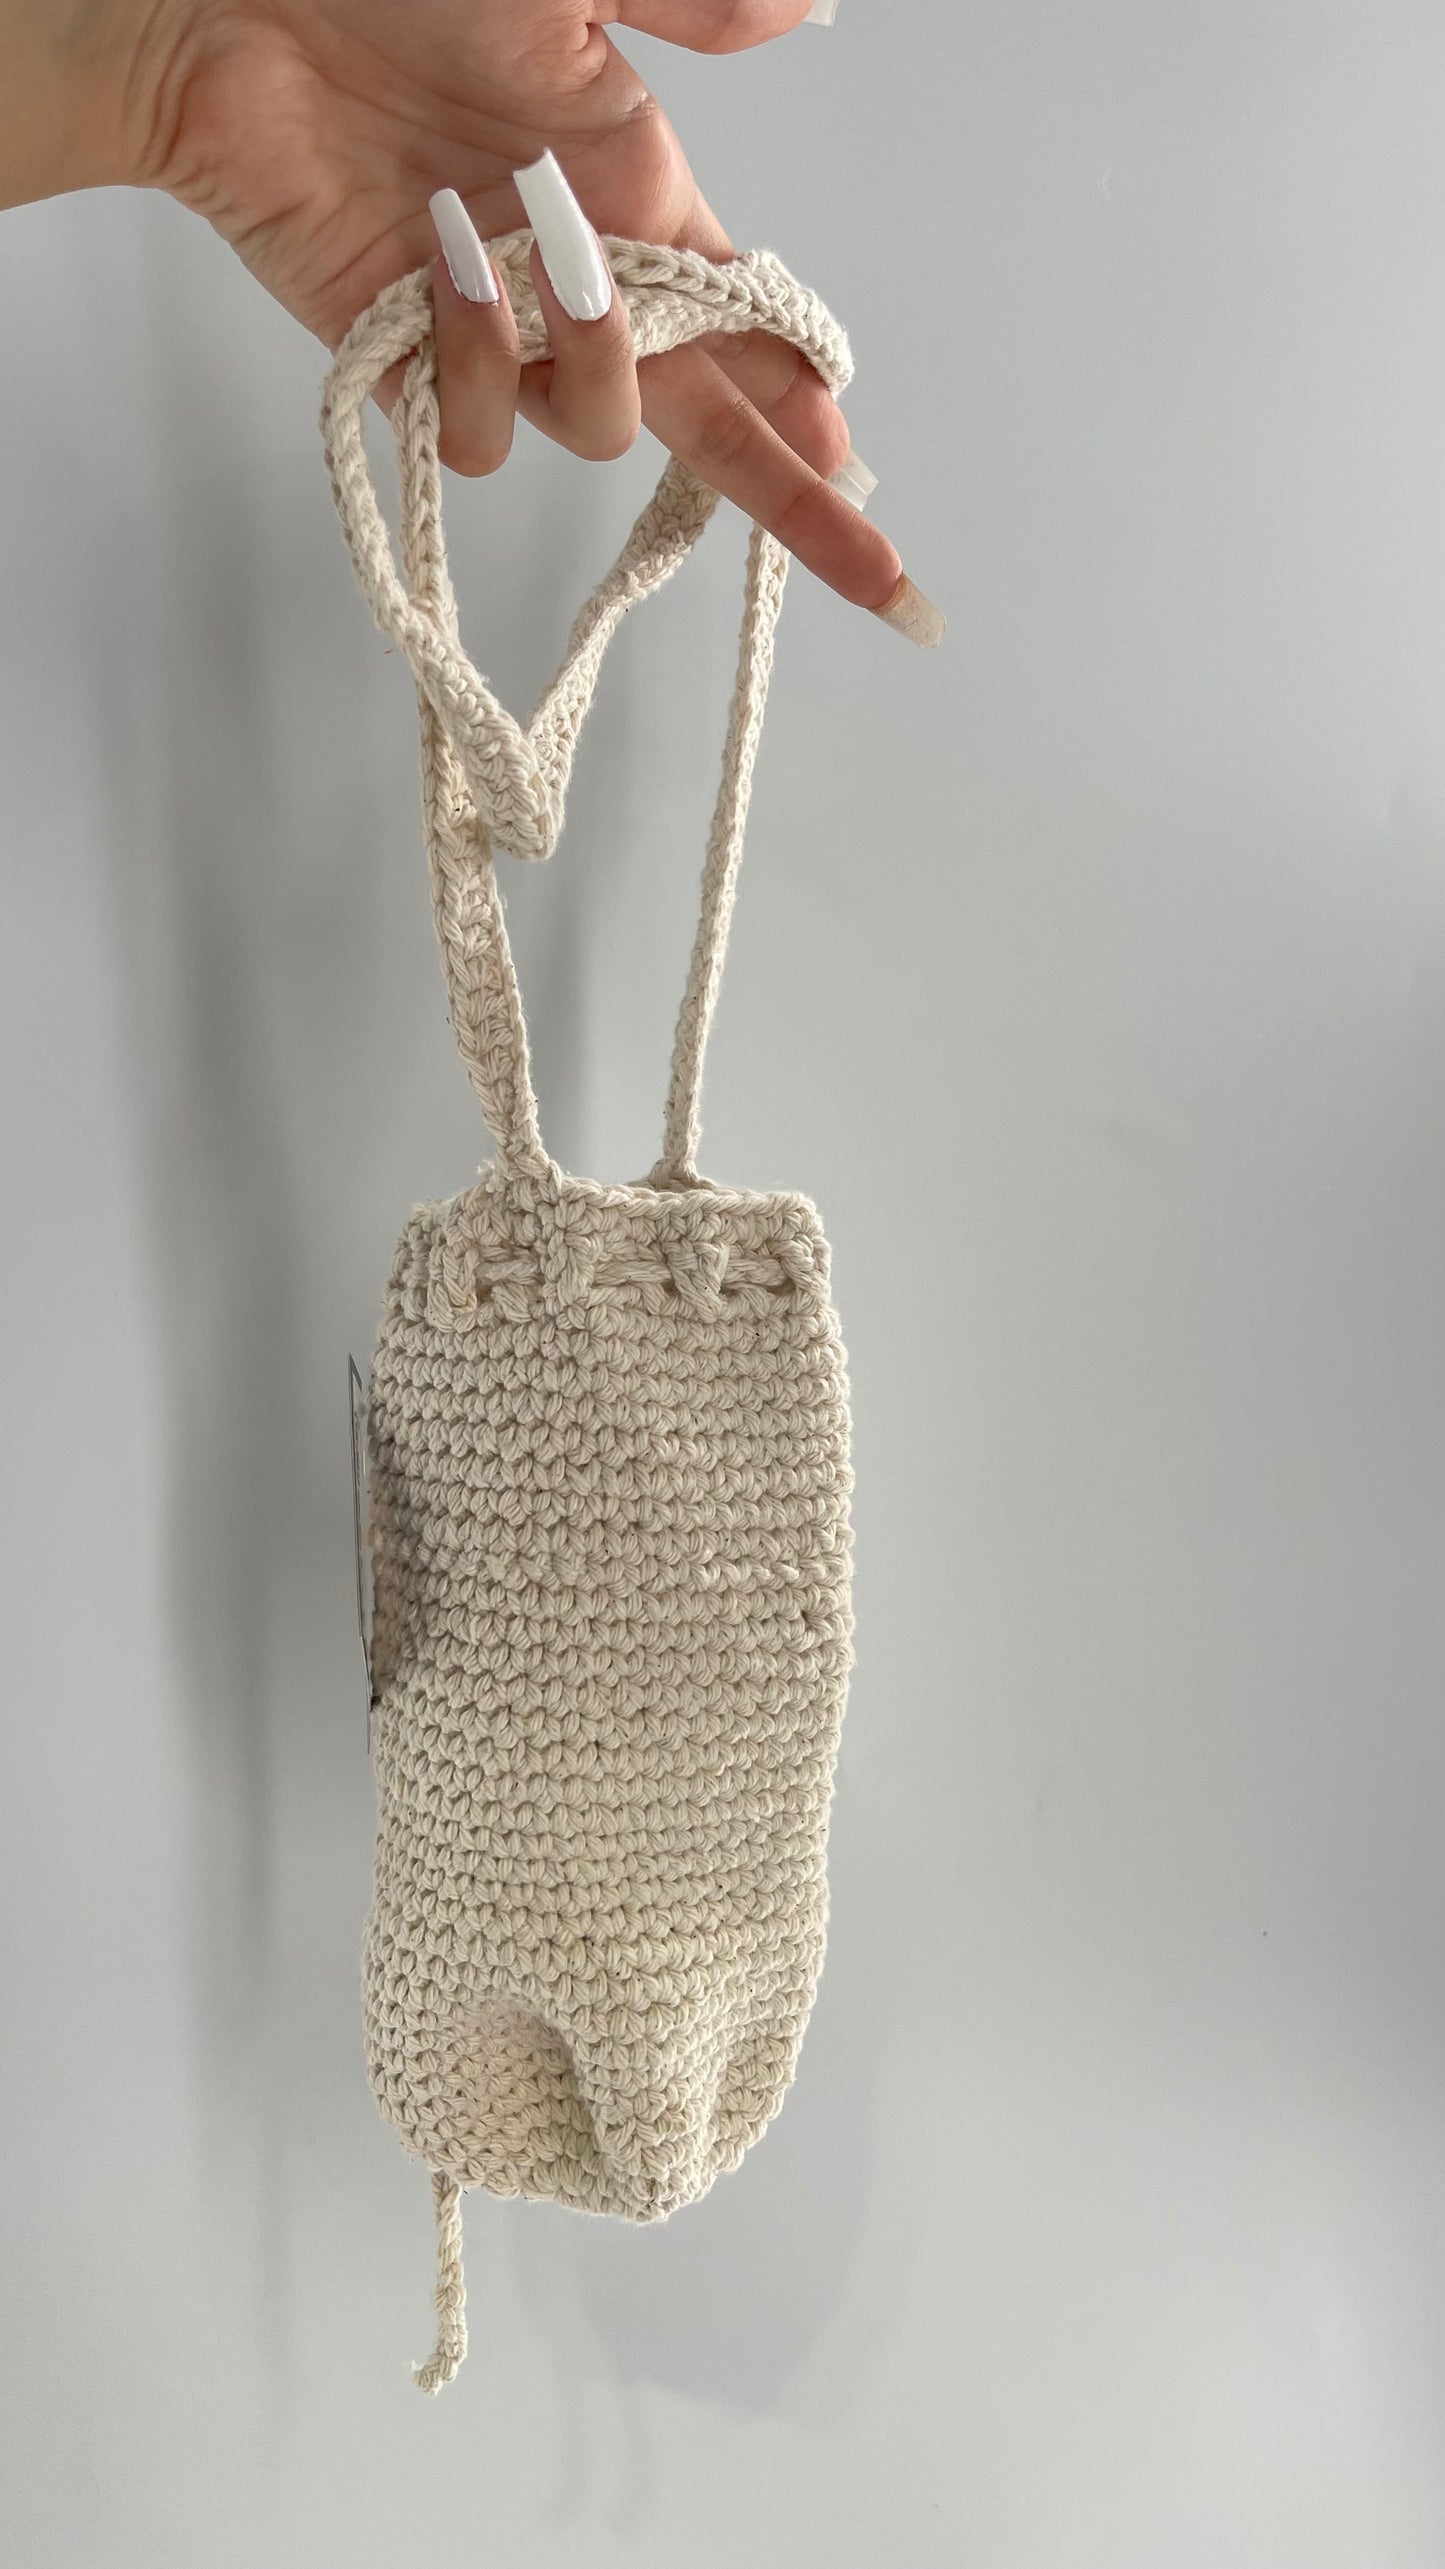 Imported Handmade Crochet Water Bottle Bag with Body/Shoulder Strap